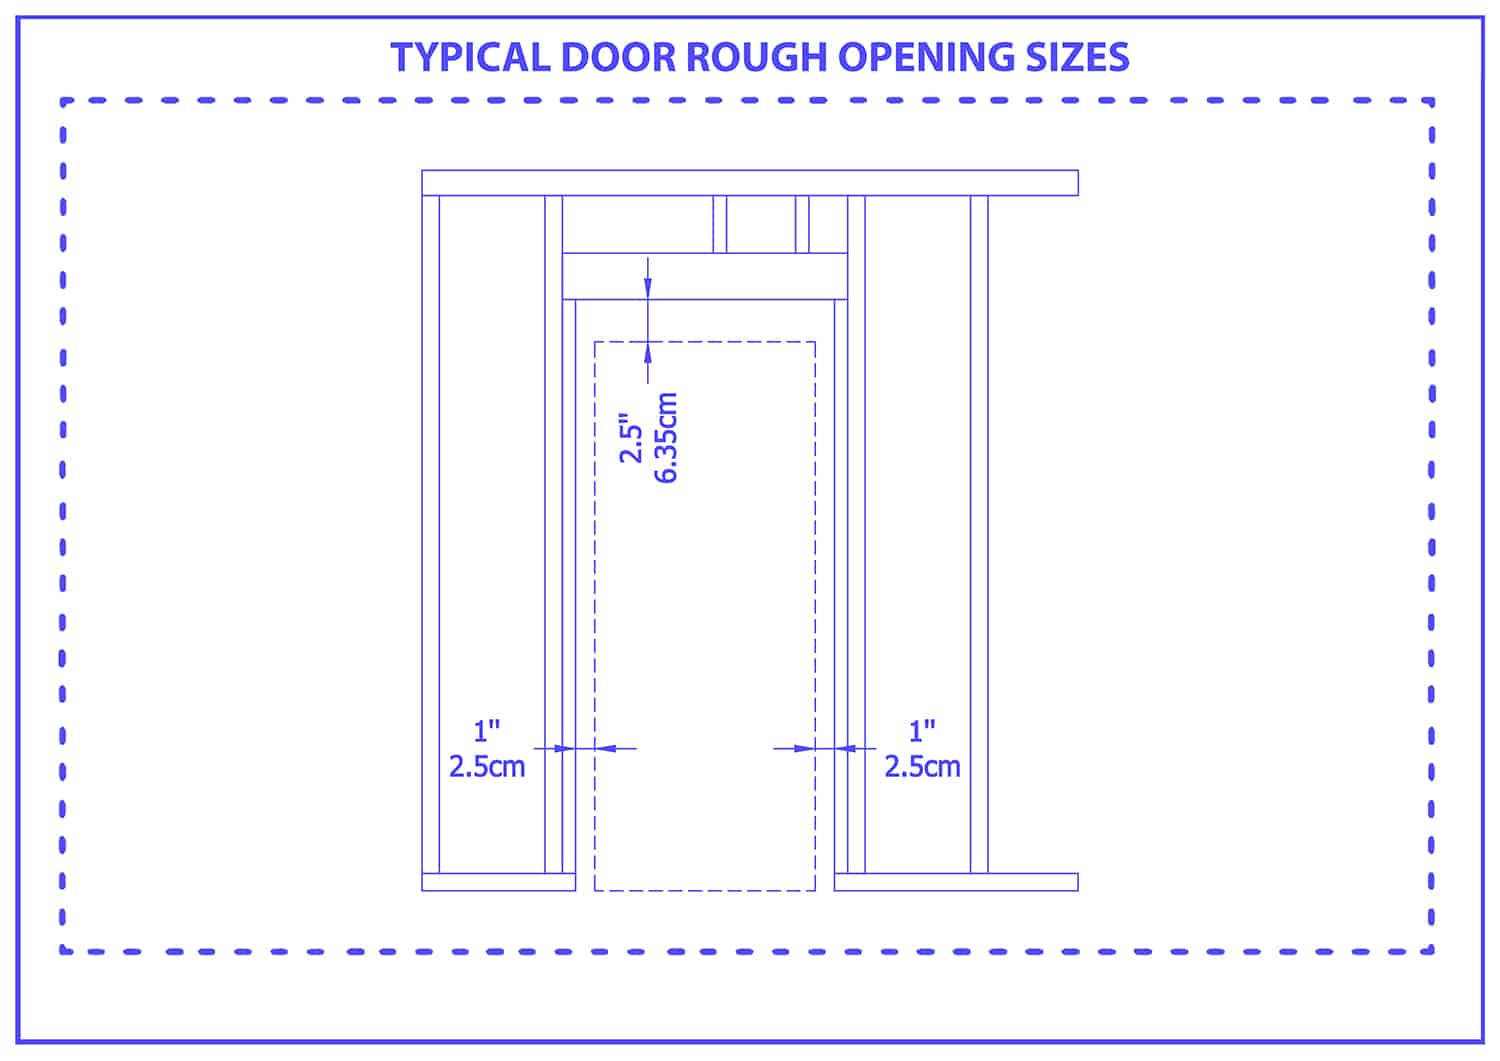 Typical door rough opening sizes